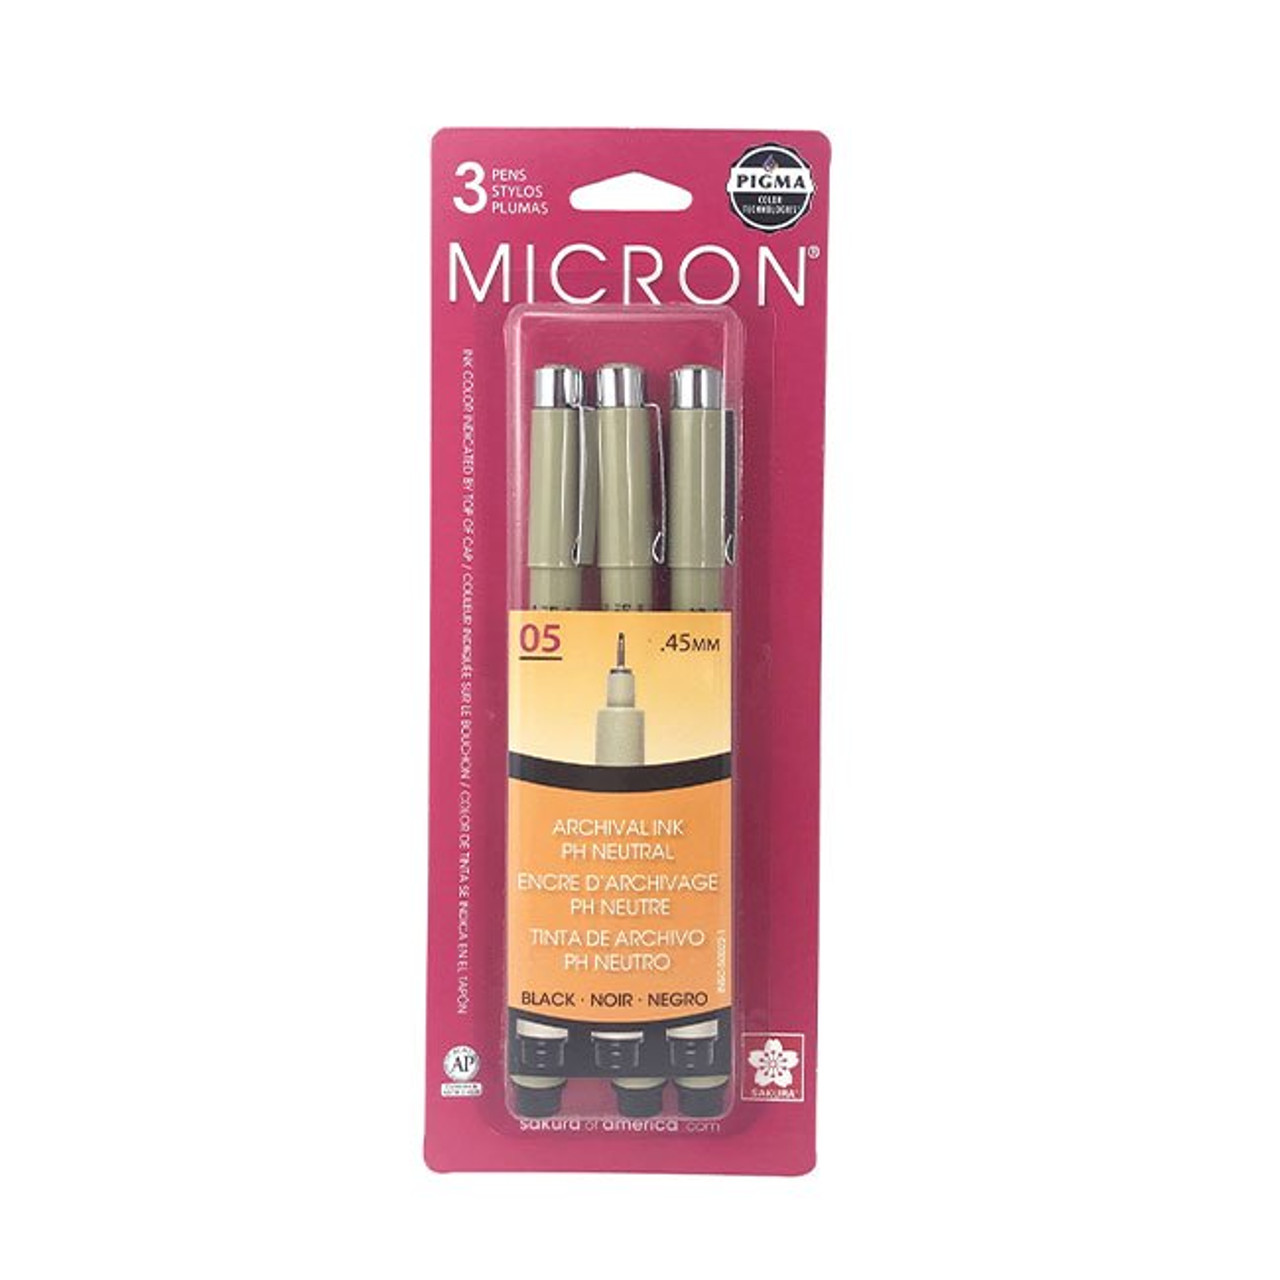 SAKURA Pigma Micron Pen 05 (.45mm) - Black